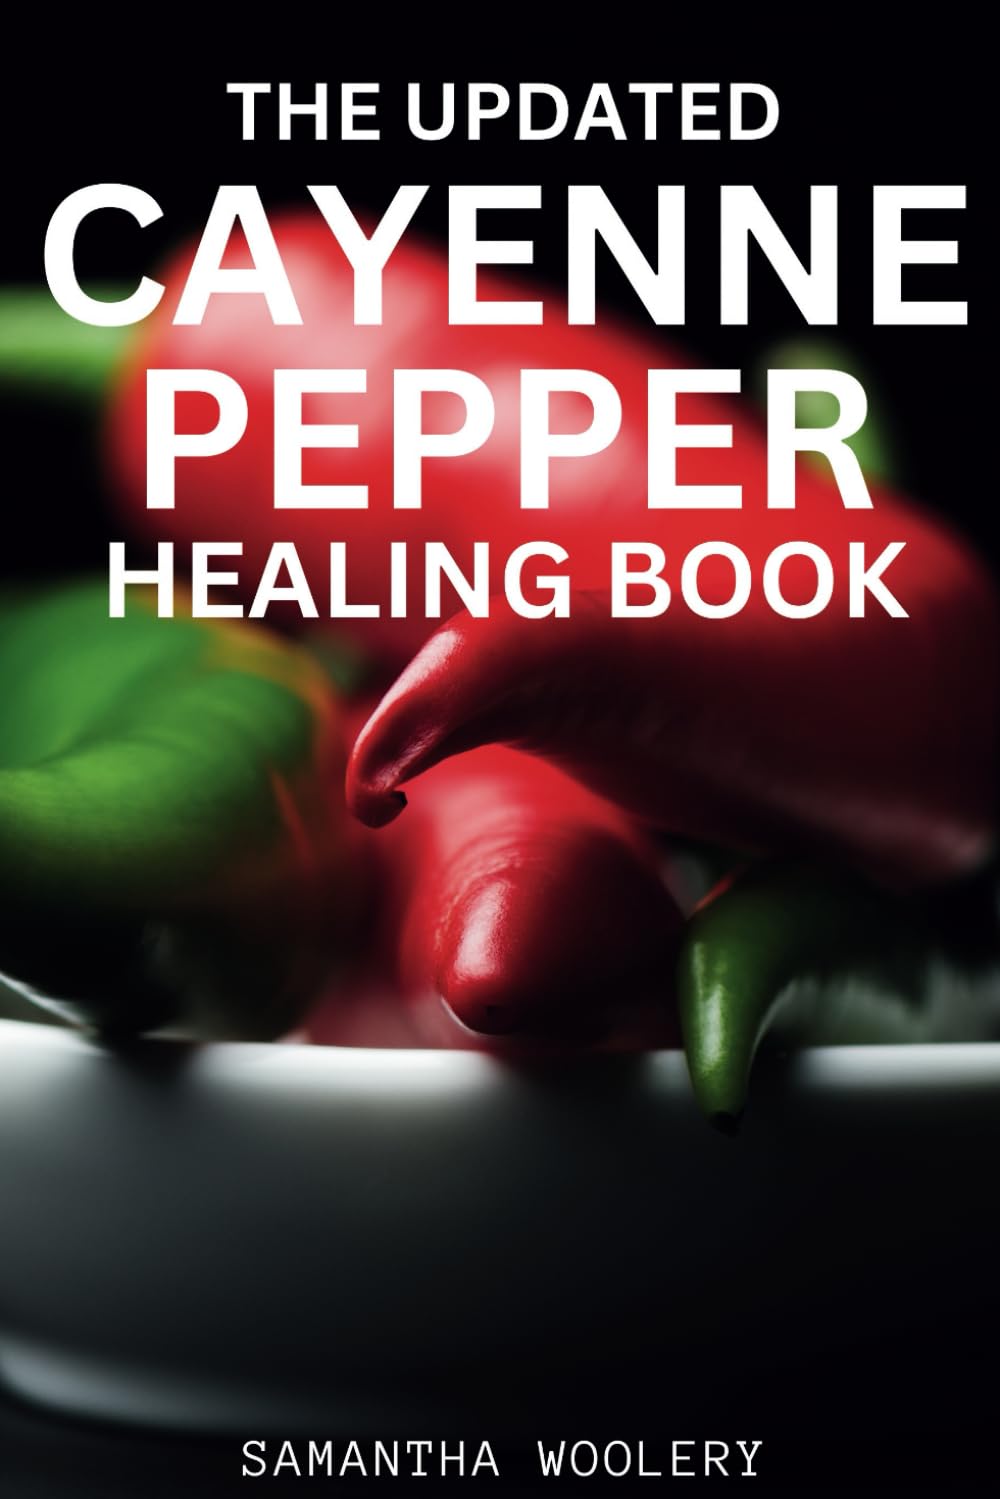 THE UPDATED CAYENNE PEPPER HEALING BOOK